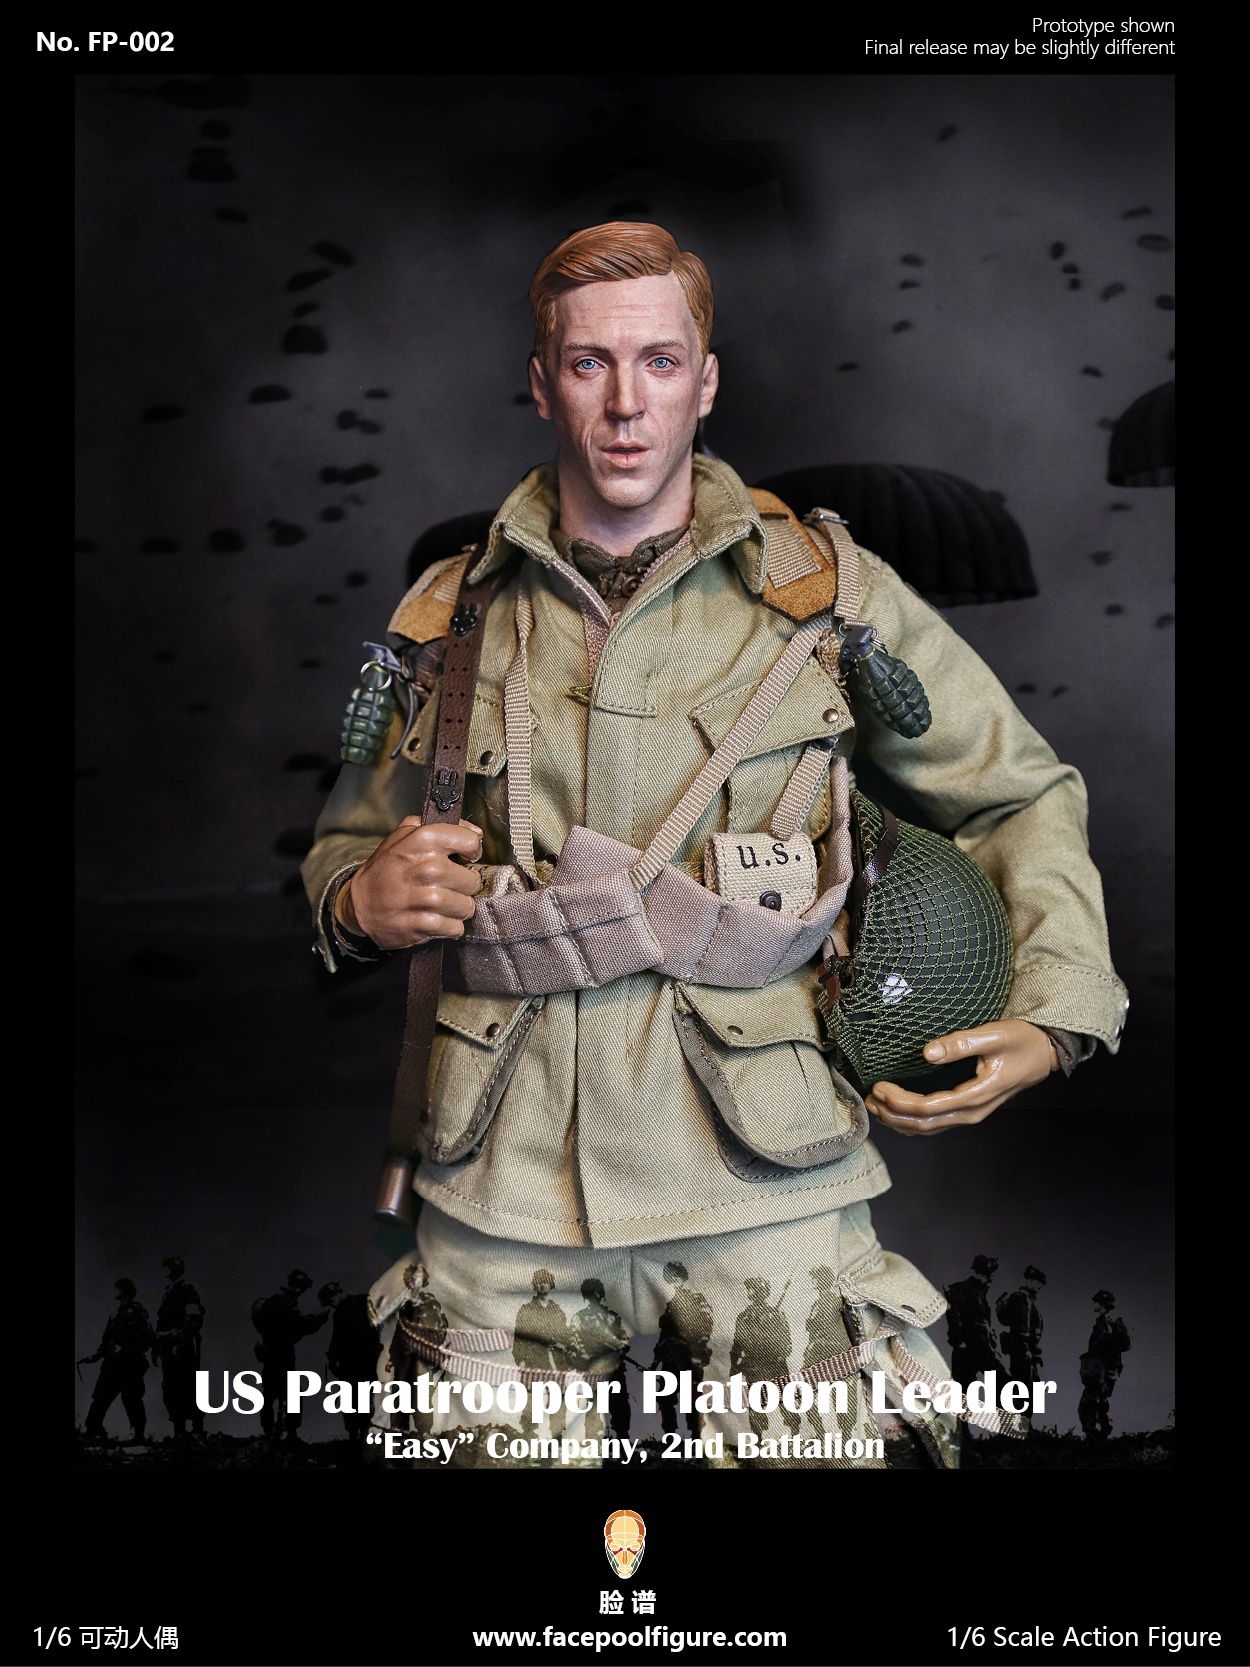 US Paratrooper Platoon Leader - “Easy” Company No. FP-002B Special Edition